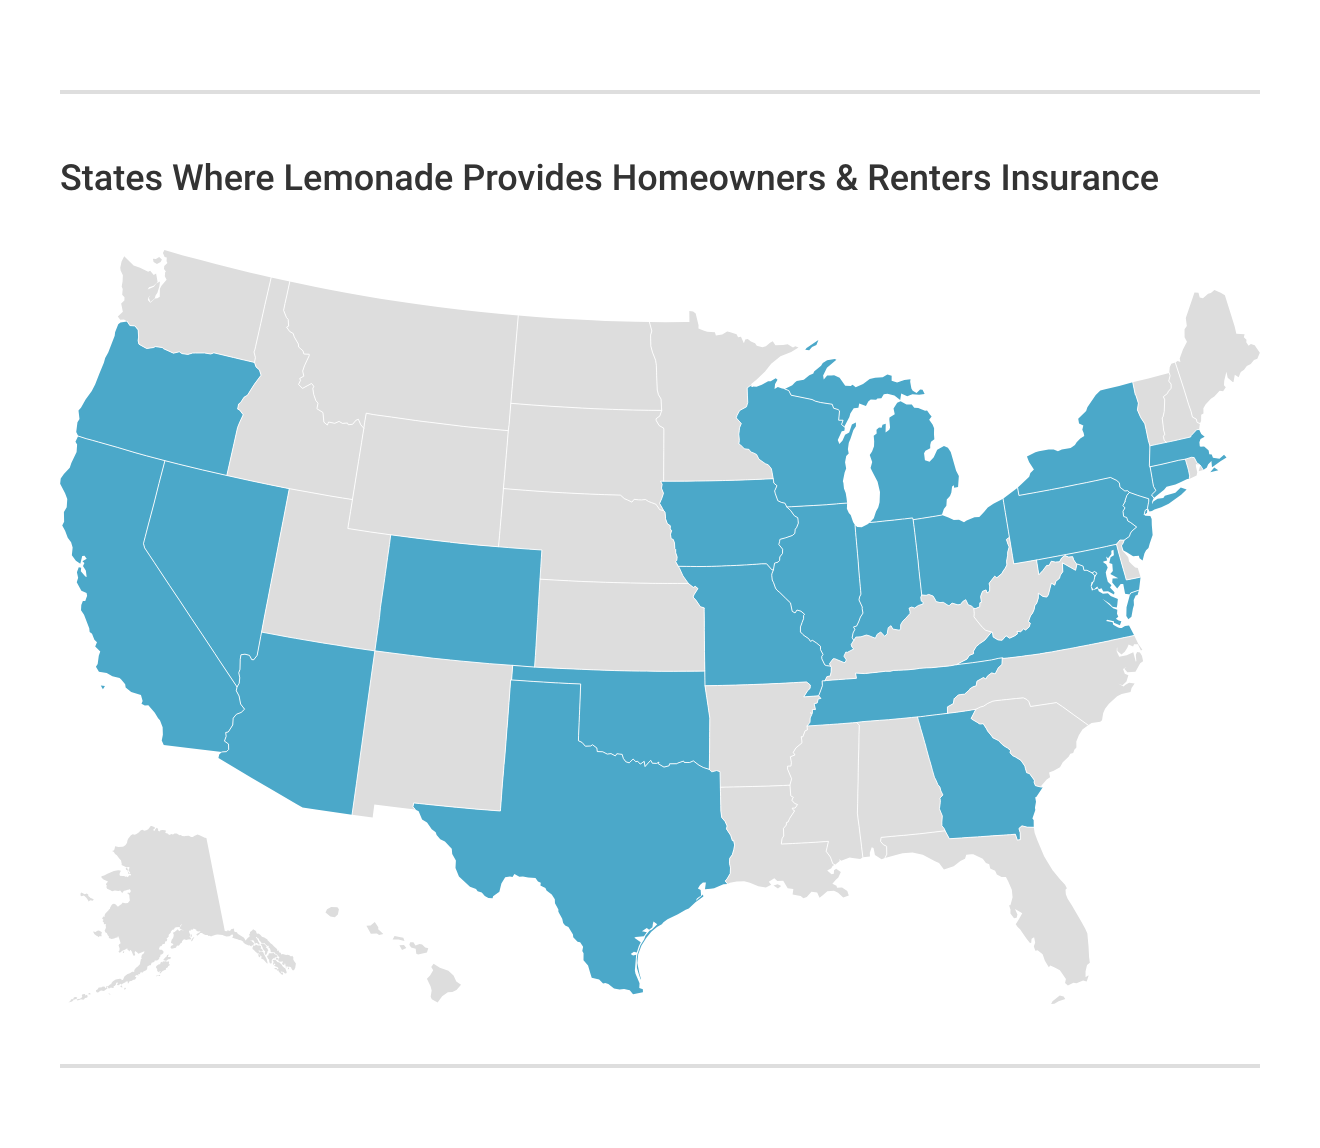 States Where Lemonade Provides Homeowners & Renters Insurance